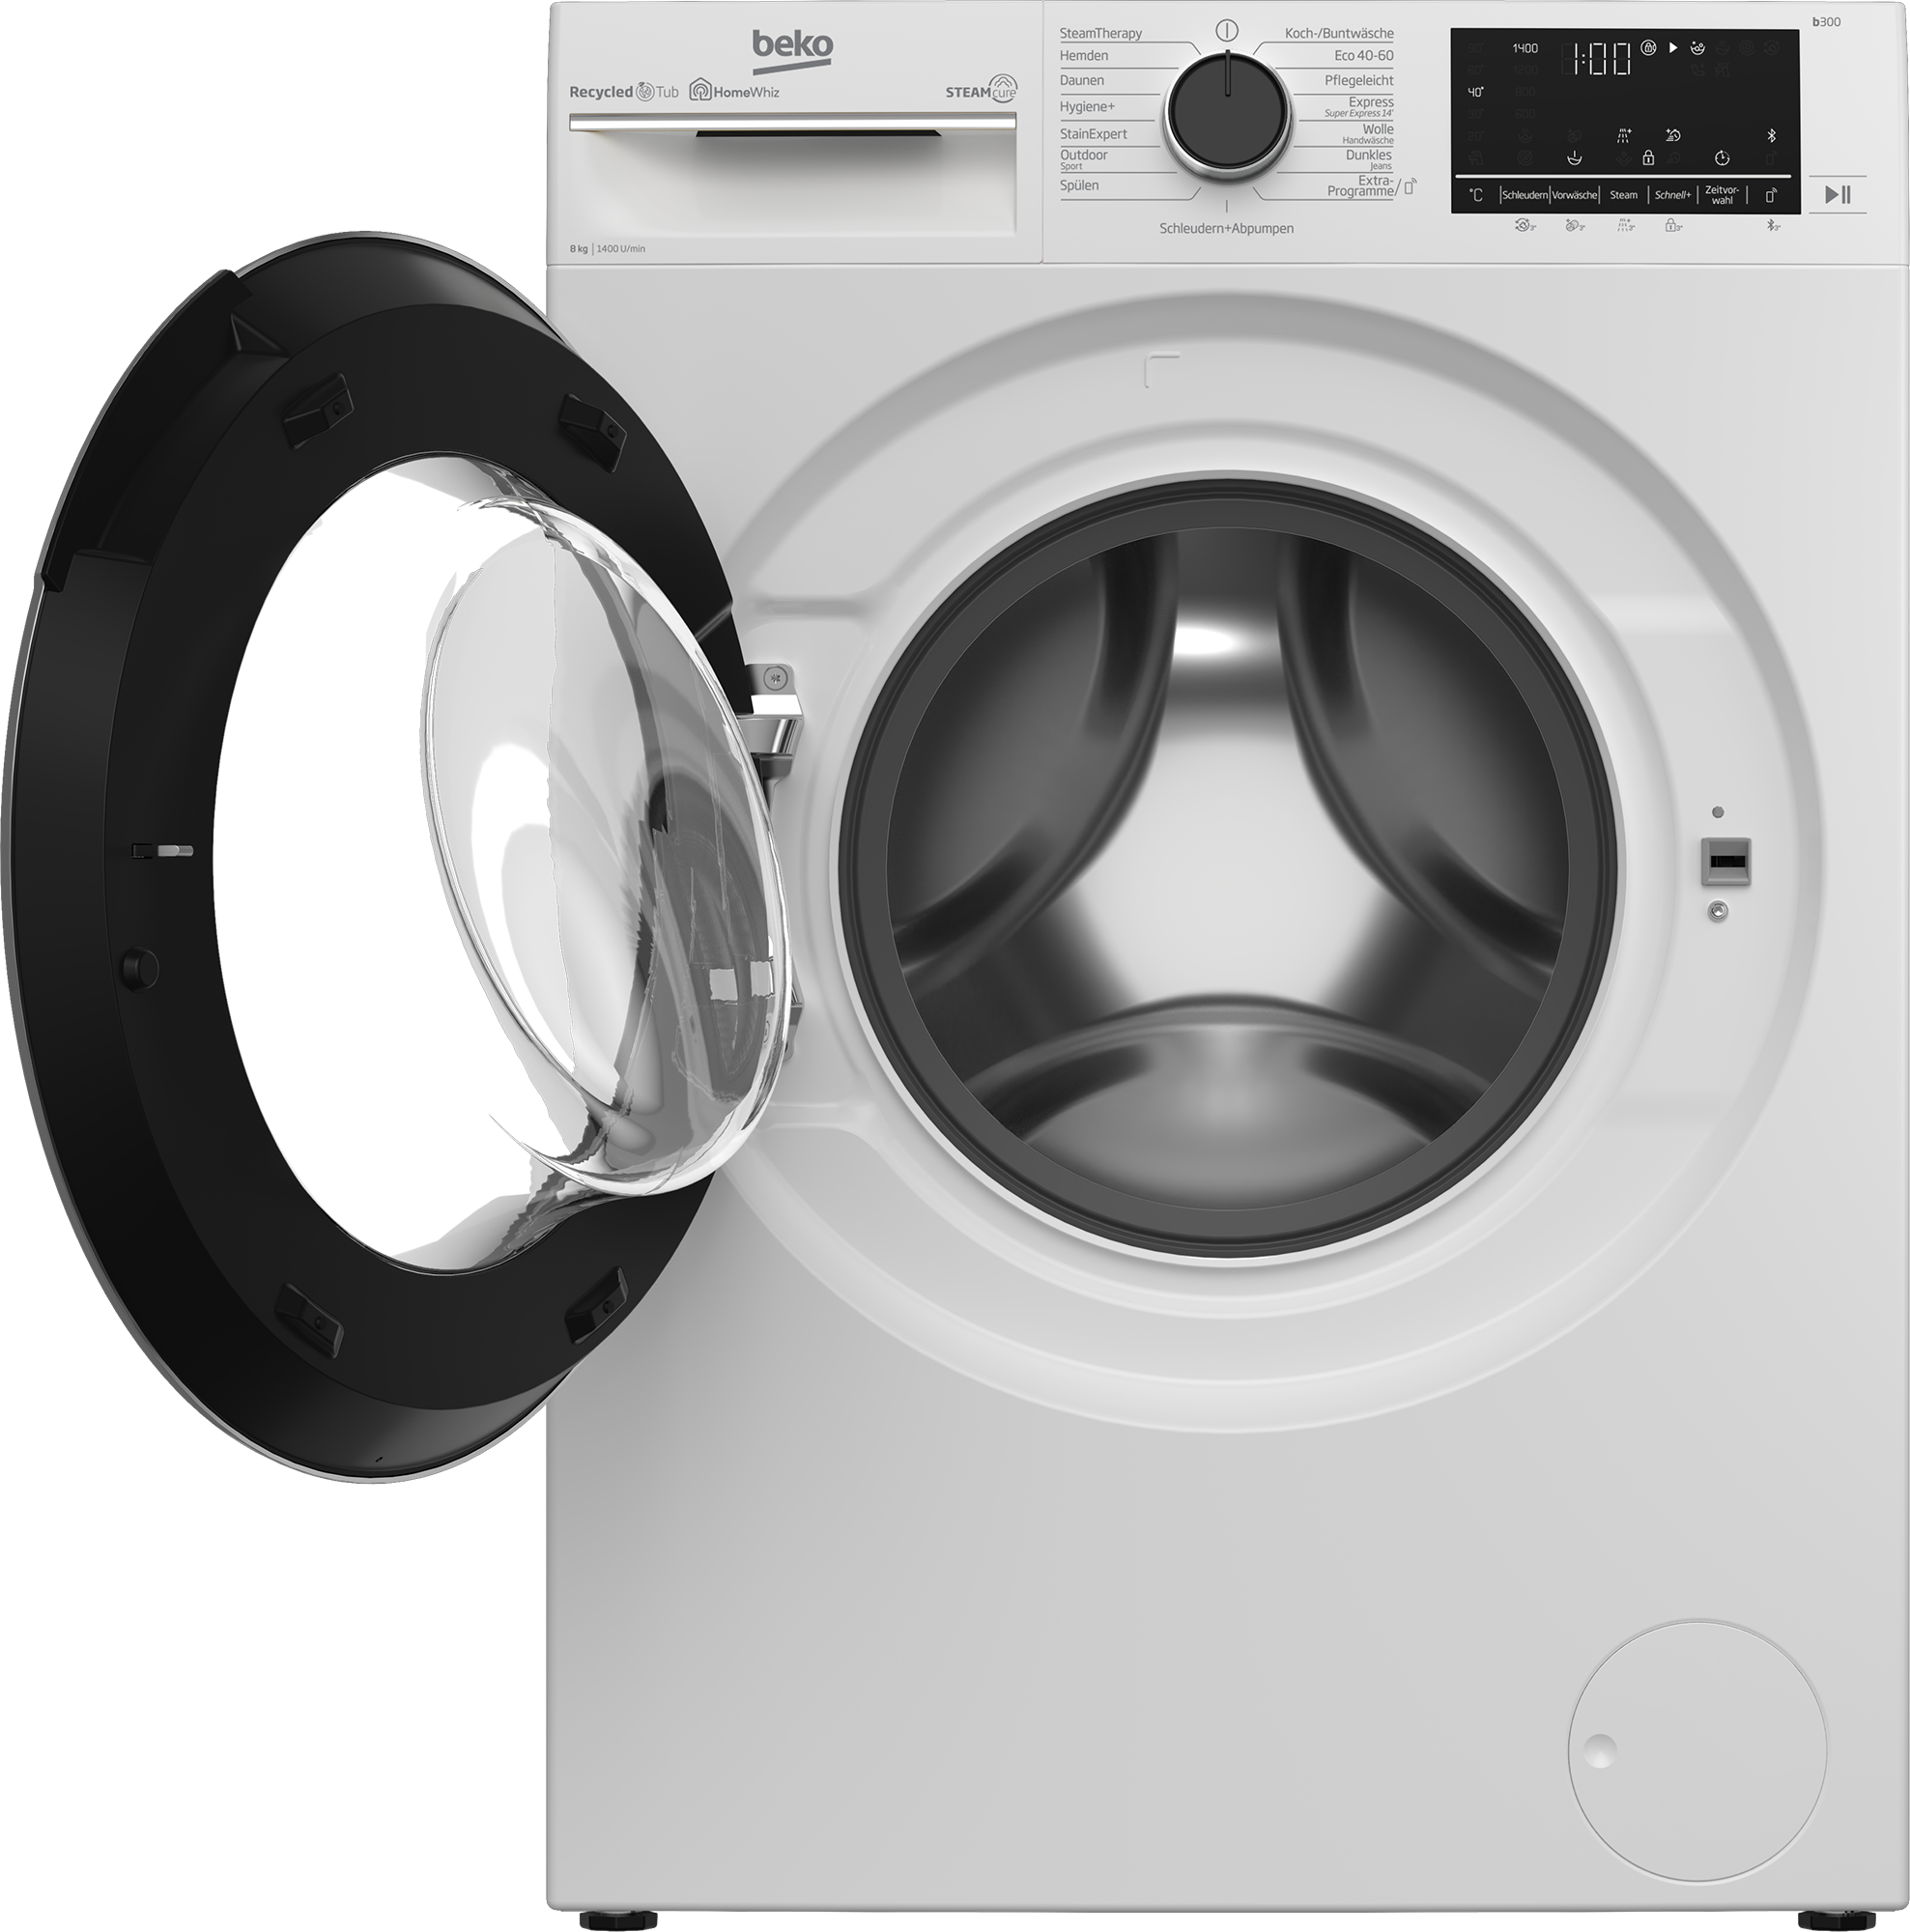 rpm) | (8 kg, BEKO Washing | Freestanding 1400 Machine B5WFU58415W